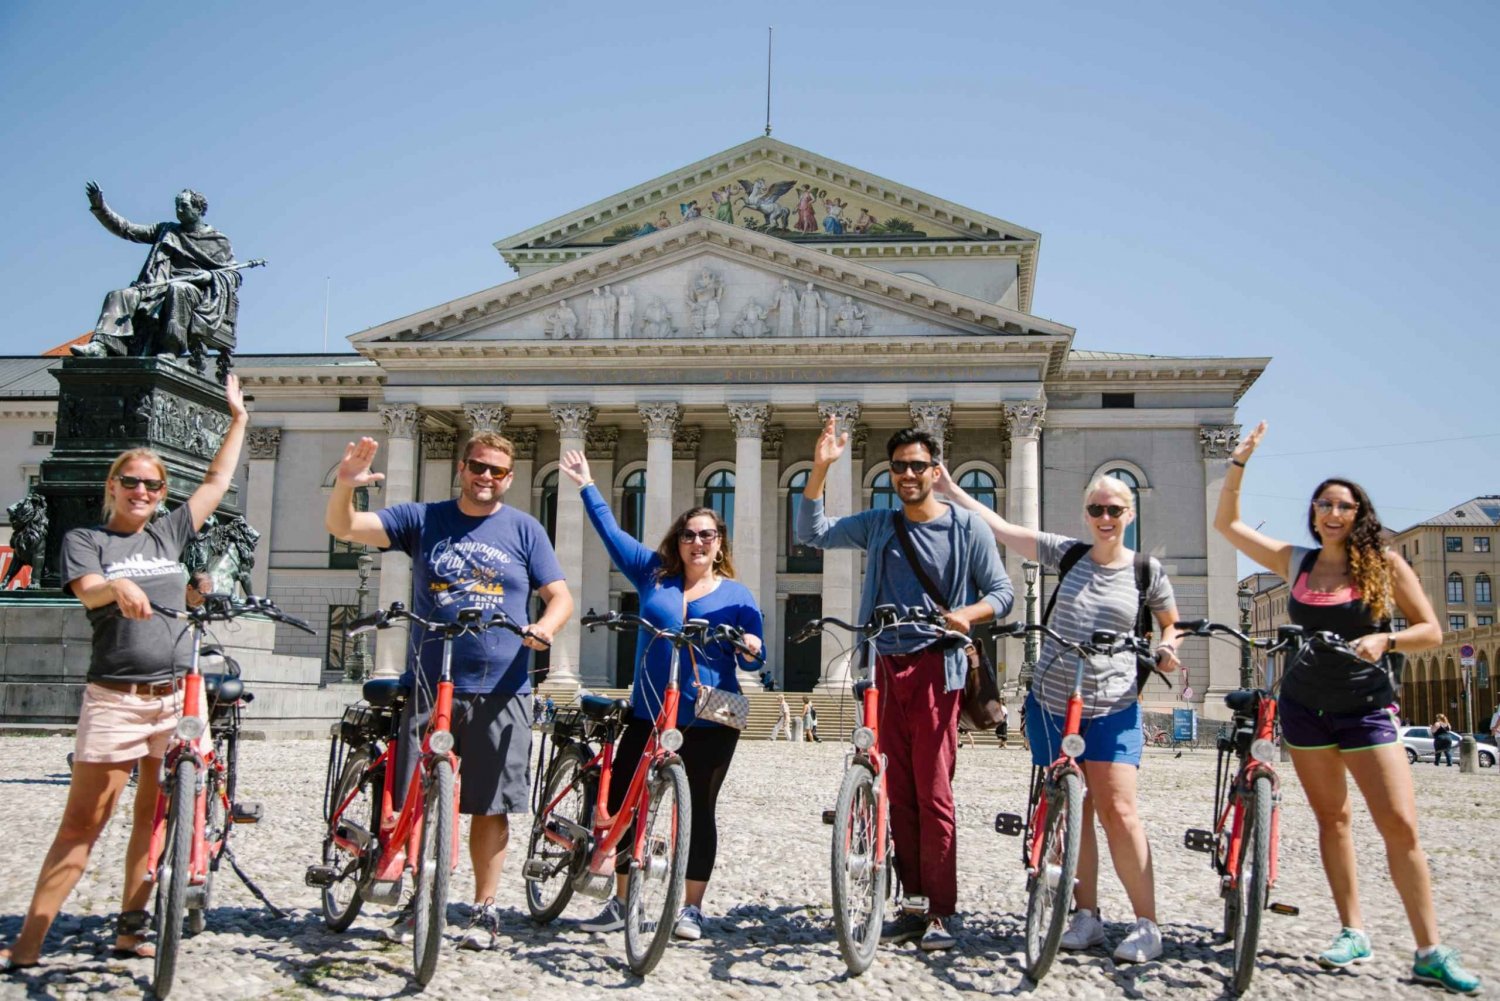 Privat sykkeltur i München med lunsjpause i ølhagen